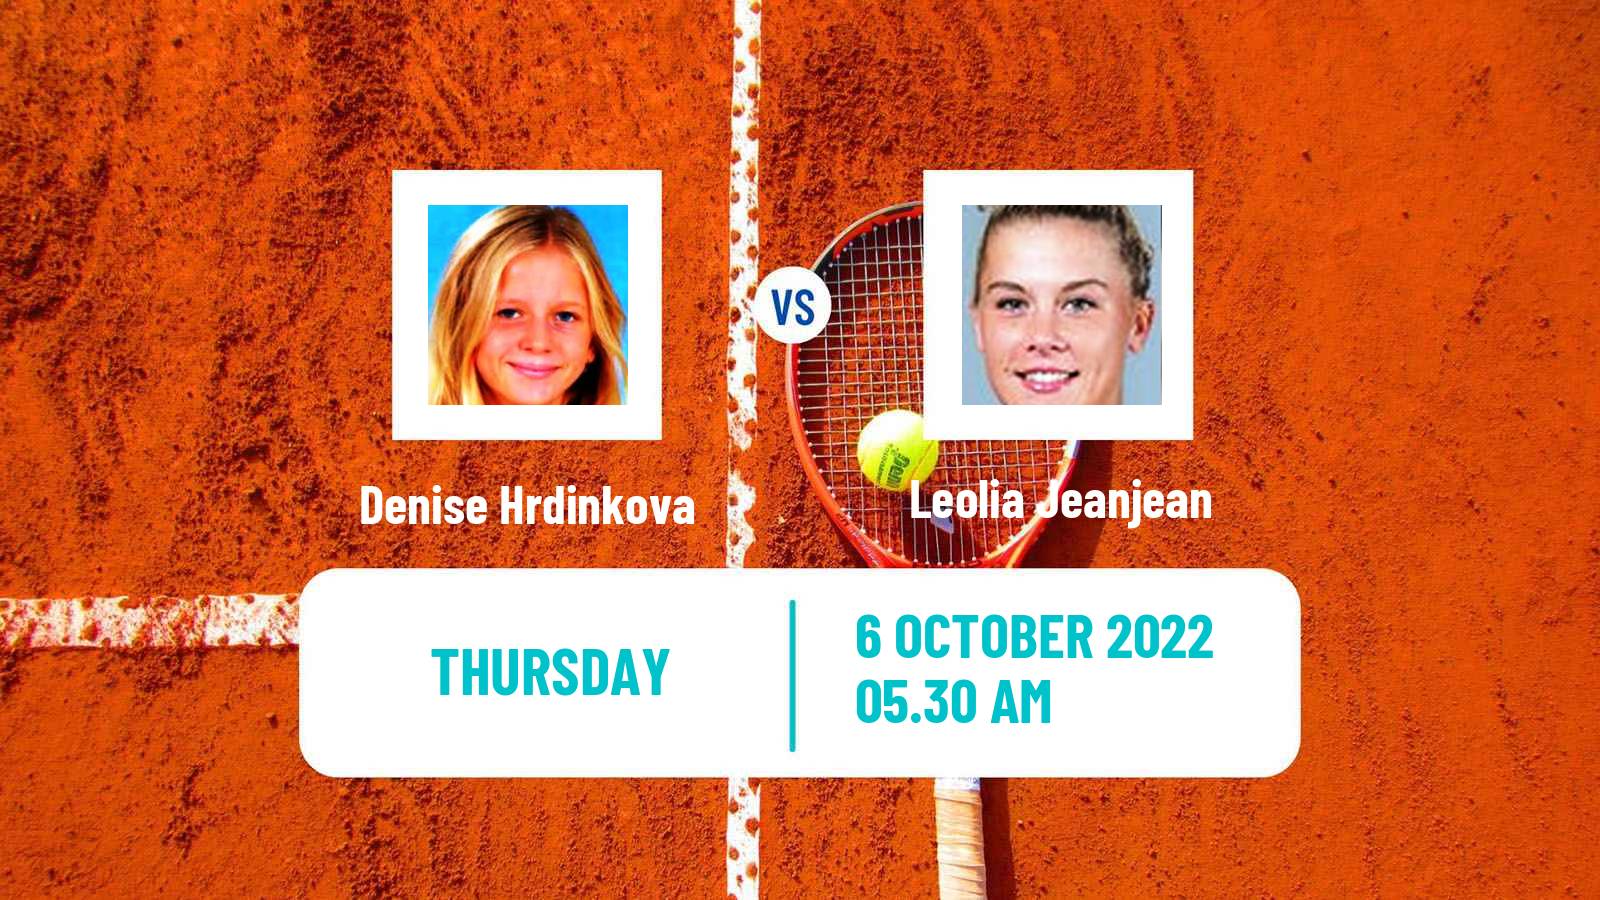 Tennis ITF Tournaments Denise Hrdinkova - Leolia Jeanjean